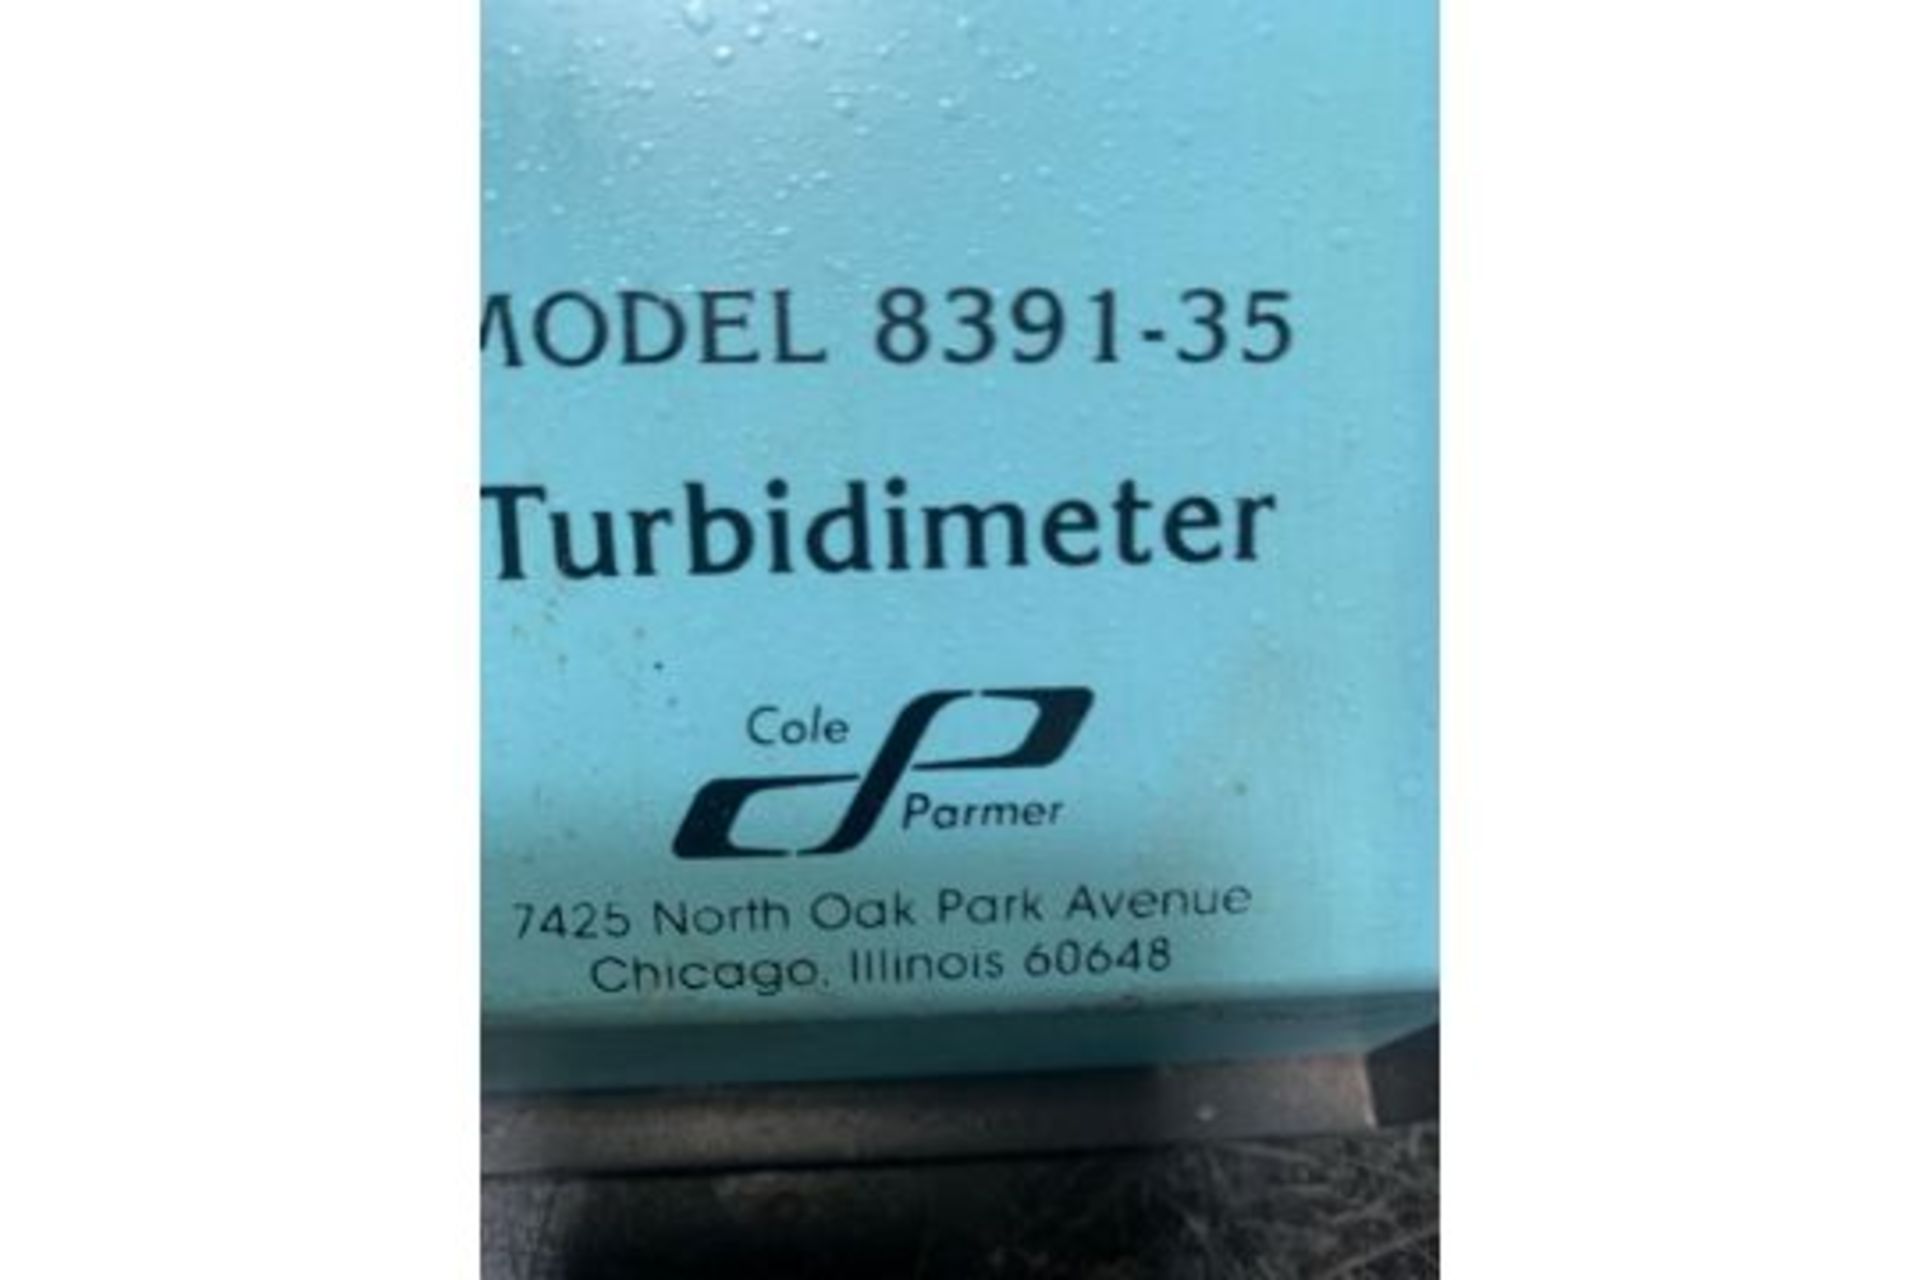 Turbidimeter Meter Model 8391-35 110 Volts, Rigging Fee: $25 - Image 2 of 4